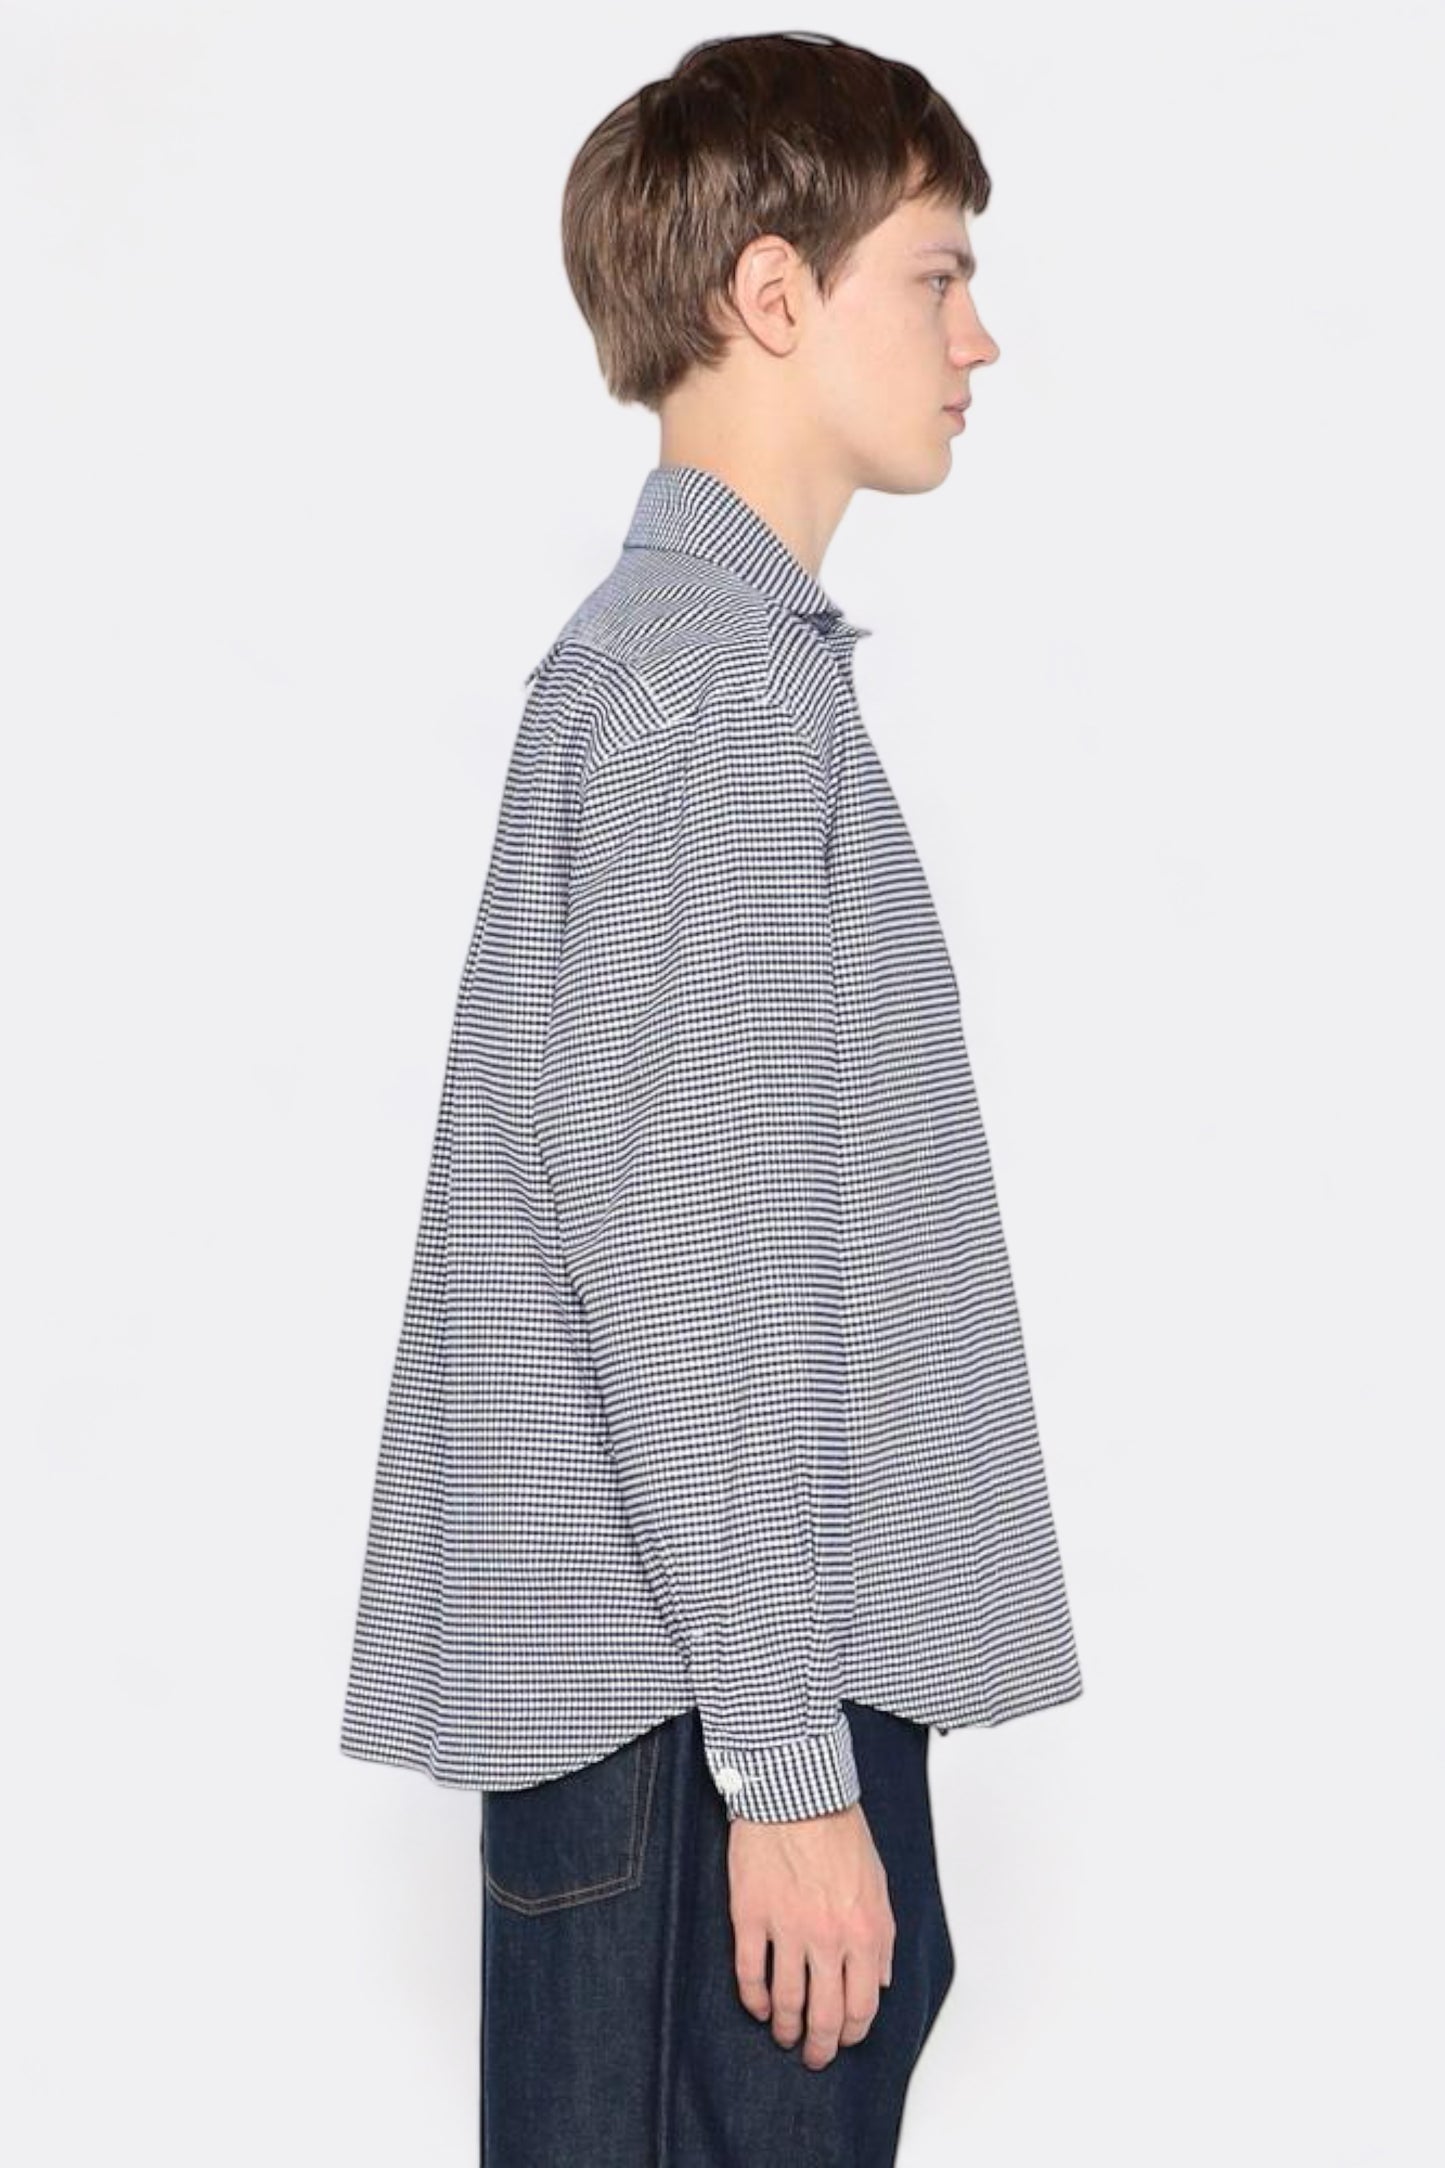 Danton - Oxford Round Collar Pullover Shirt Pattern (Navy Gingham)